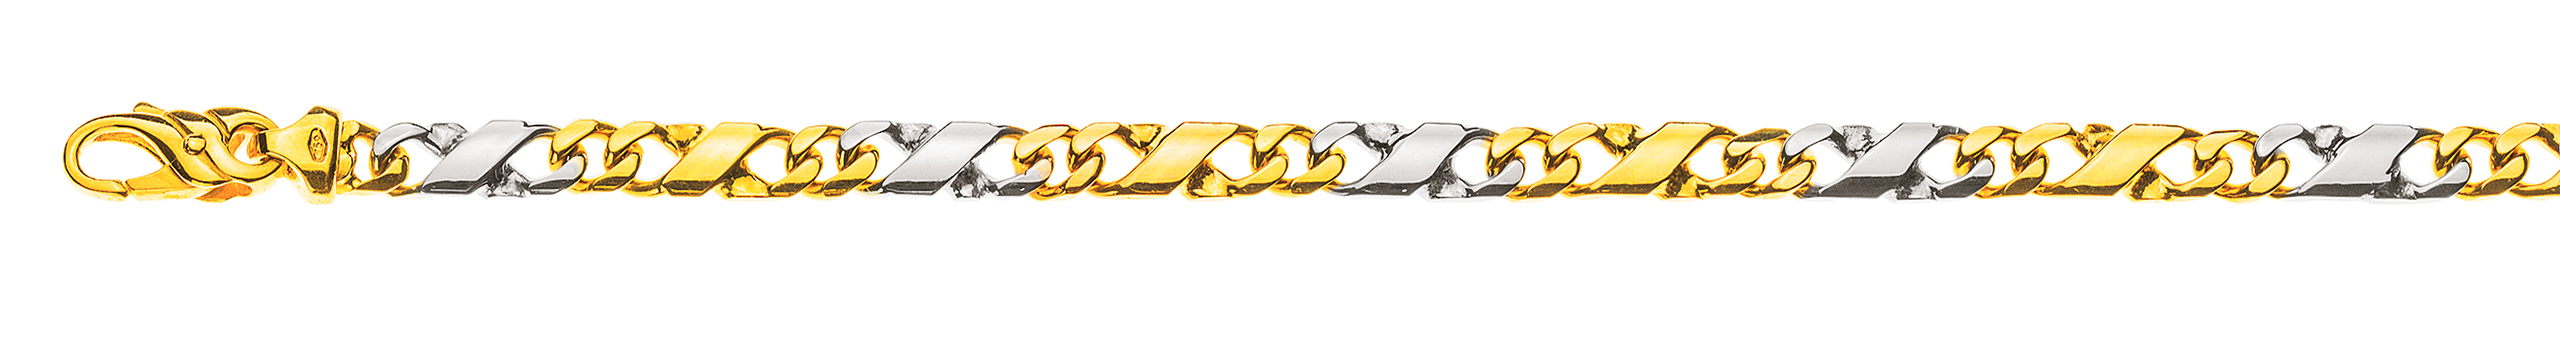 AURONOS Prestige Carrera 18K Yellow/White Gold Bracelet 22cm 5mm